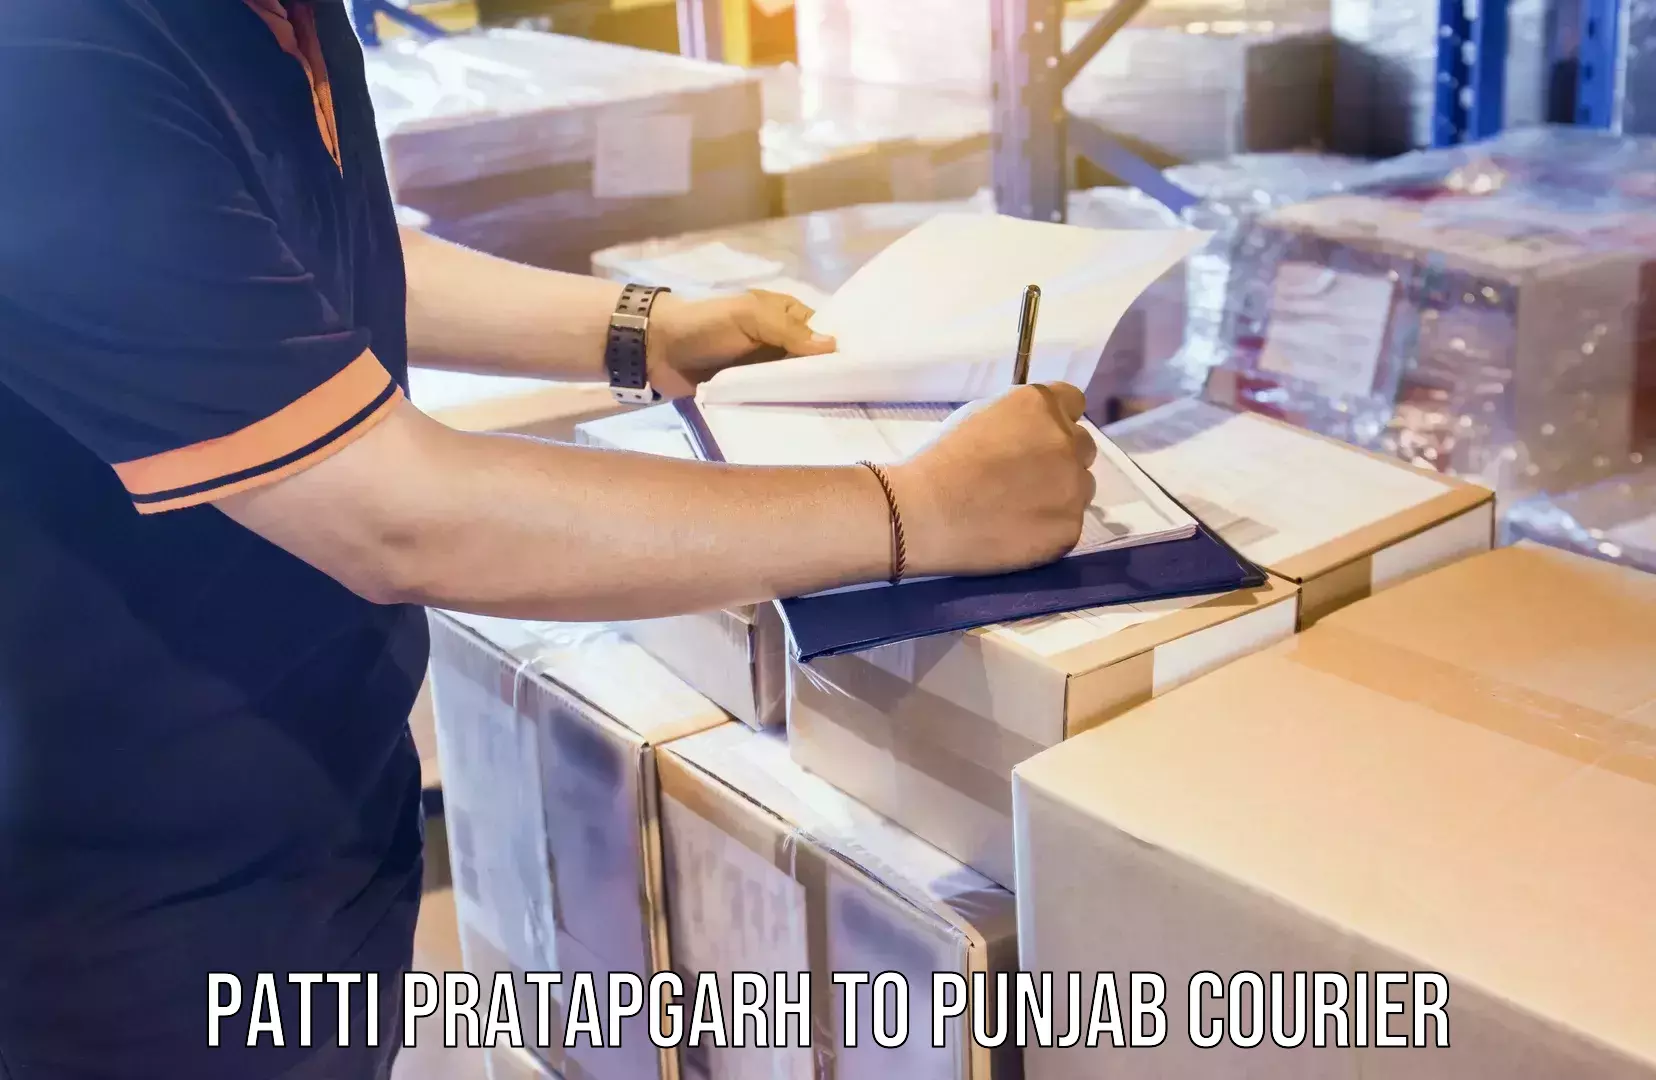 Furniture movers and packers Patti Pratapgarh to Punjab